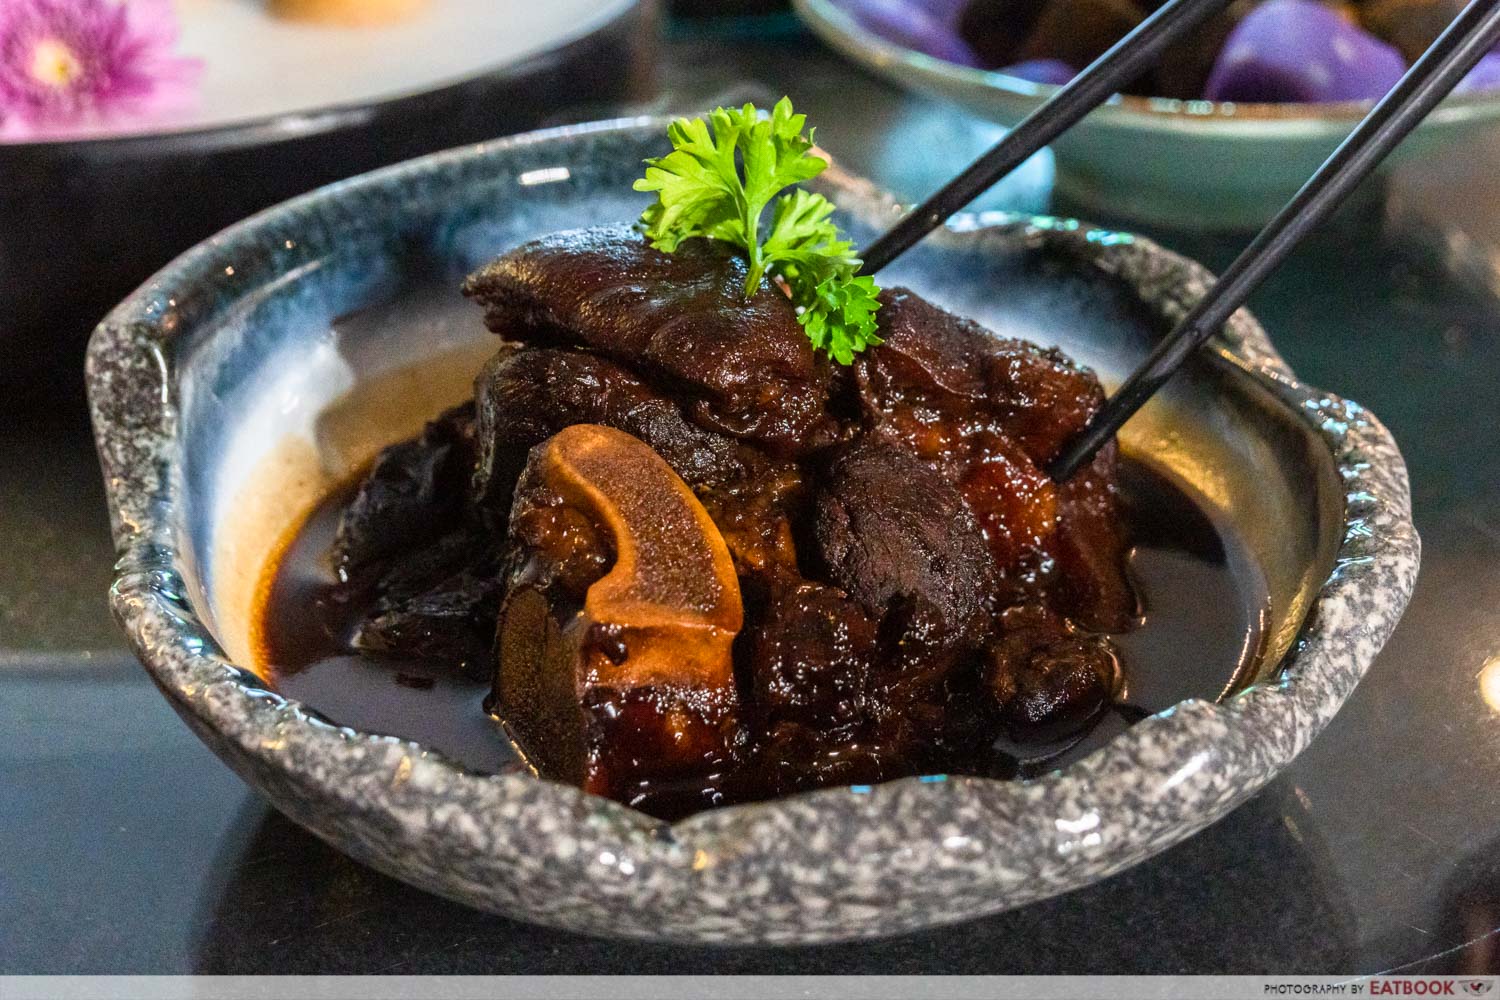 yanxi dimsum & hotpot - black vinegar pork trotters